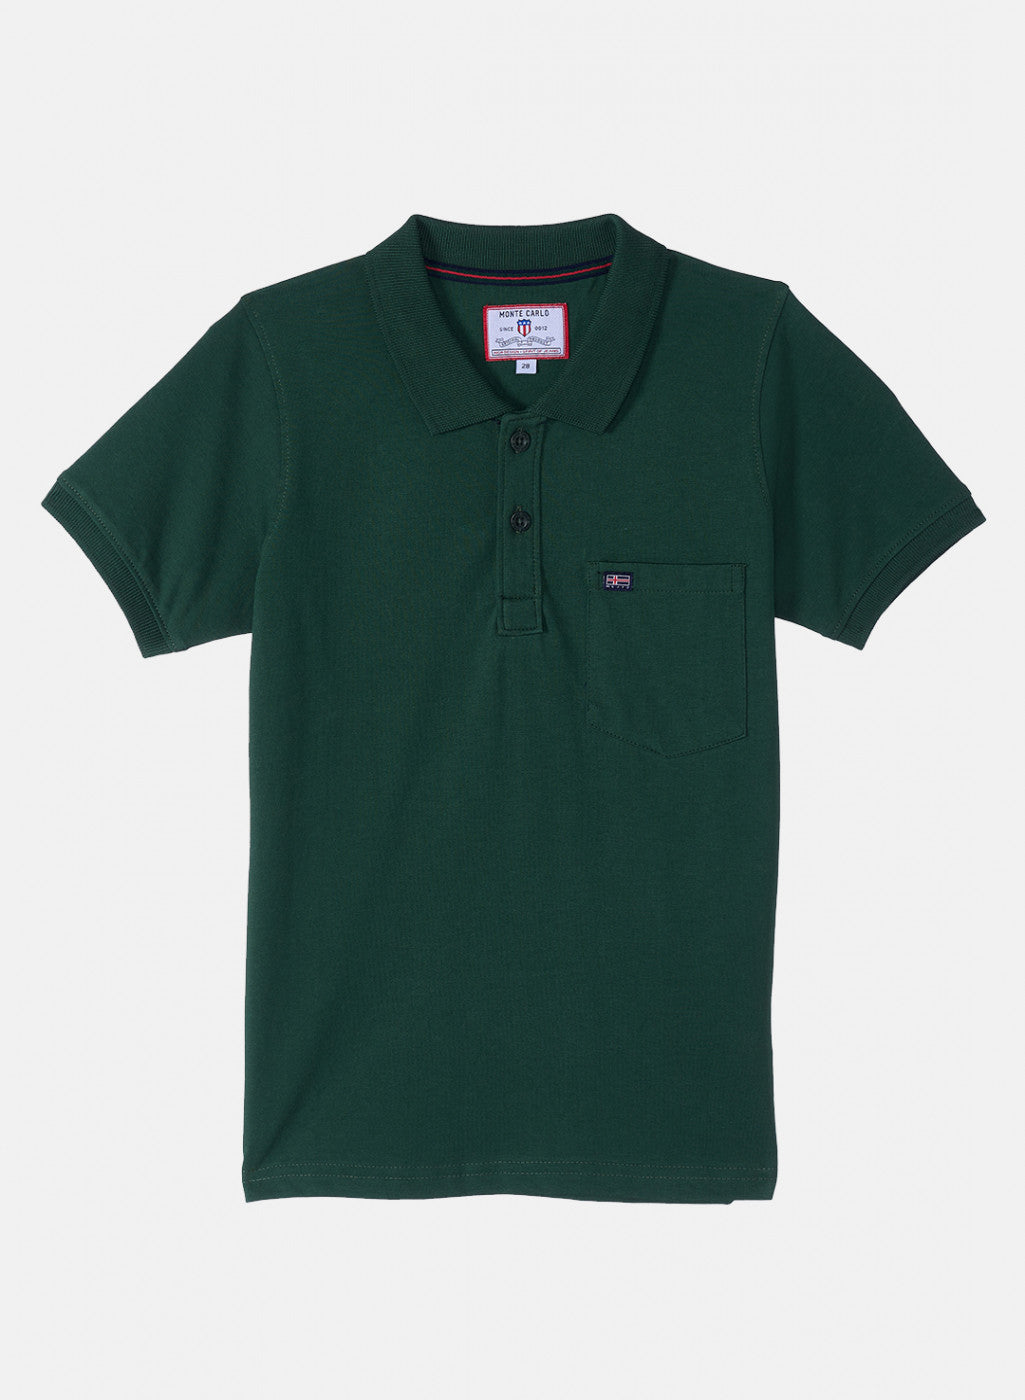 Boys Green Plain T-Shirt